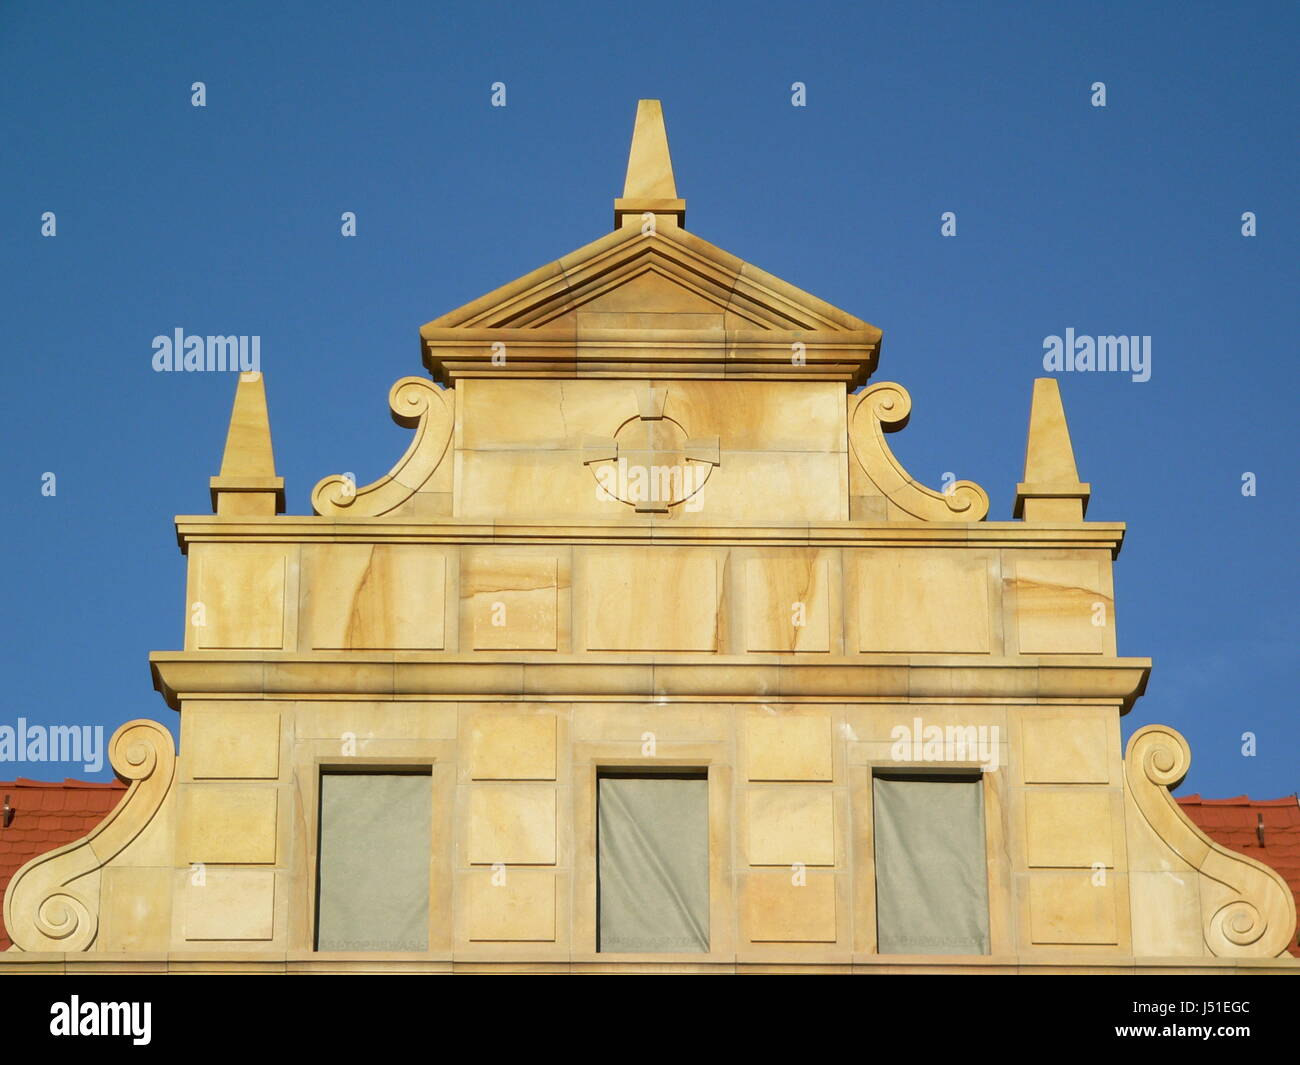 Symmetrie-Sandstein-Stil der Bau Architektur Baustil Stockfoto